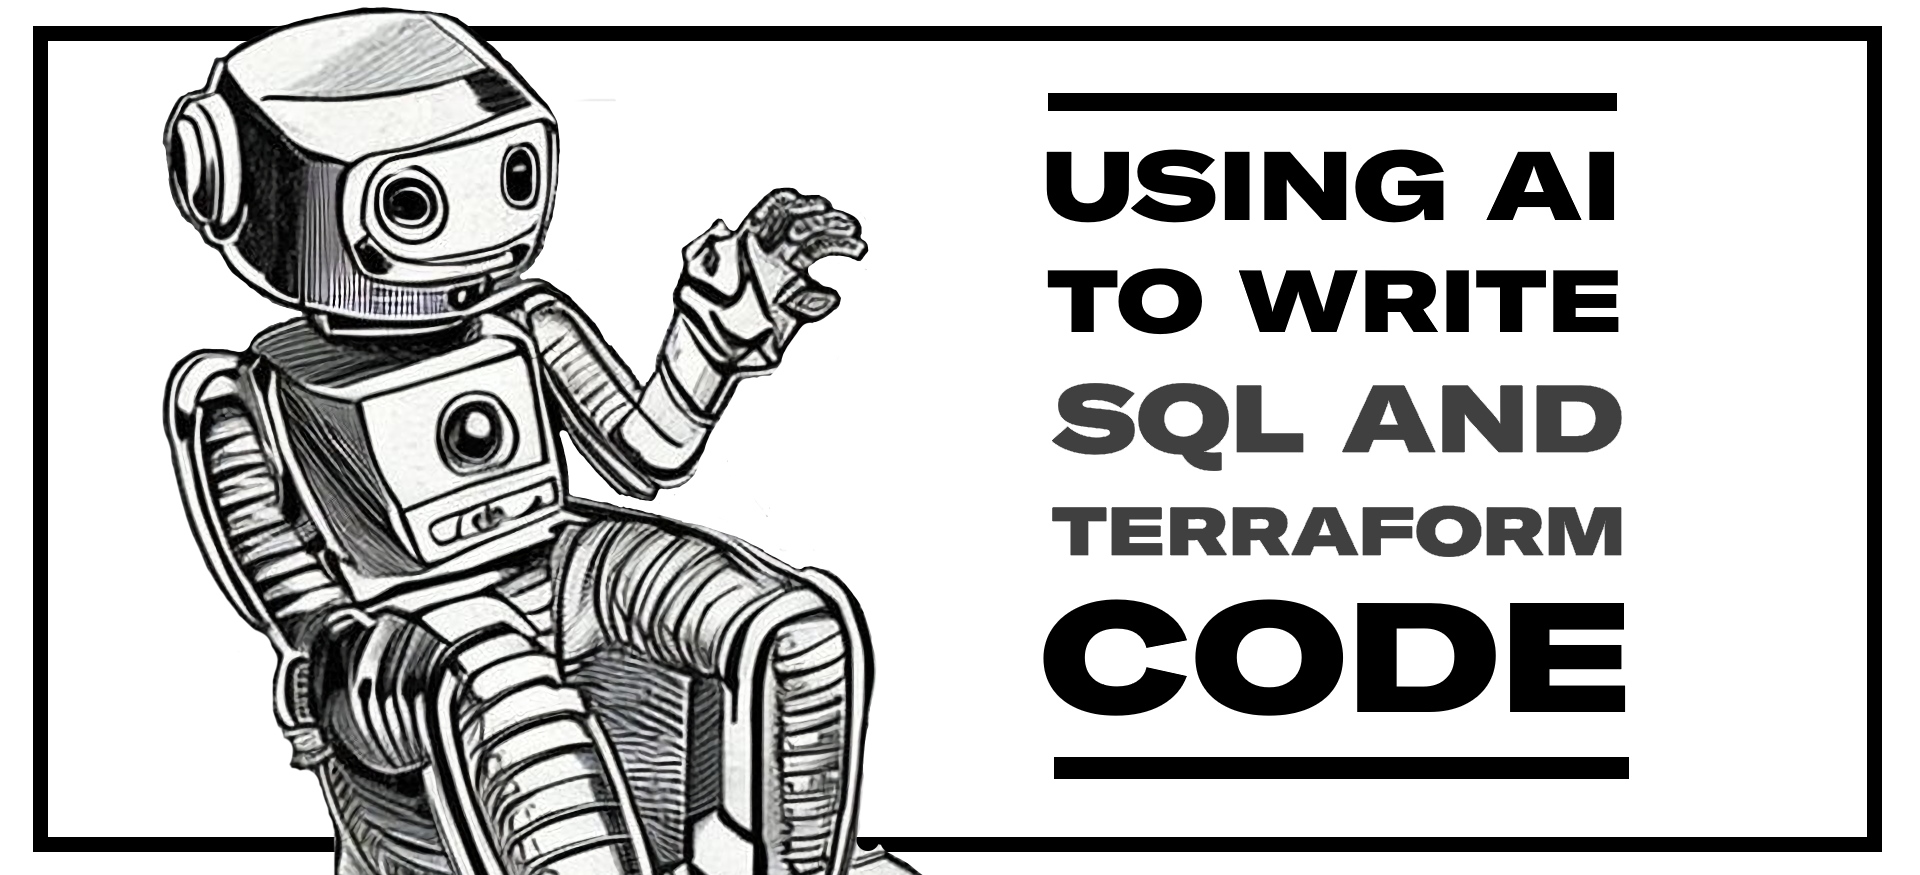 Using AI to write SQL and Terraform Code